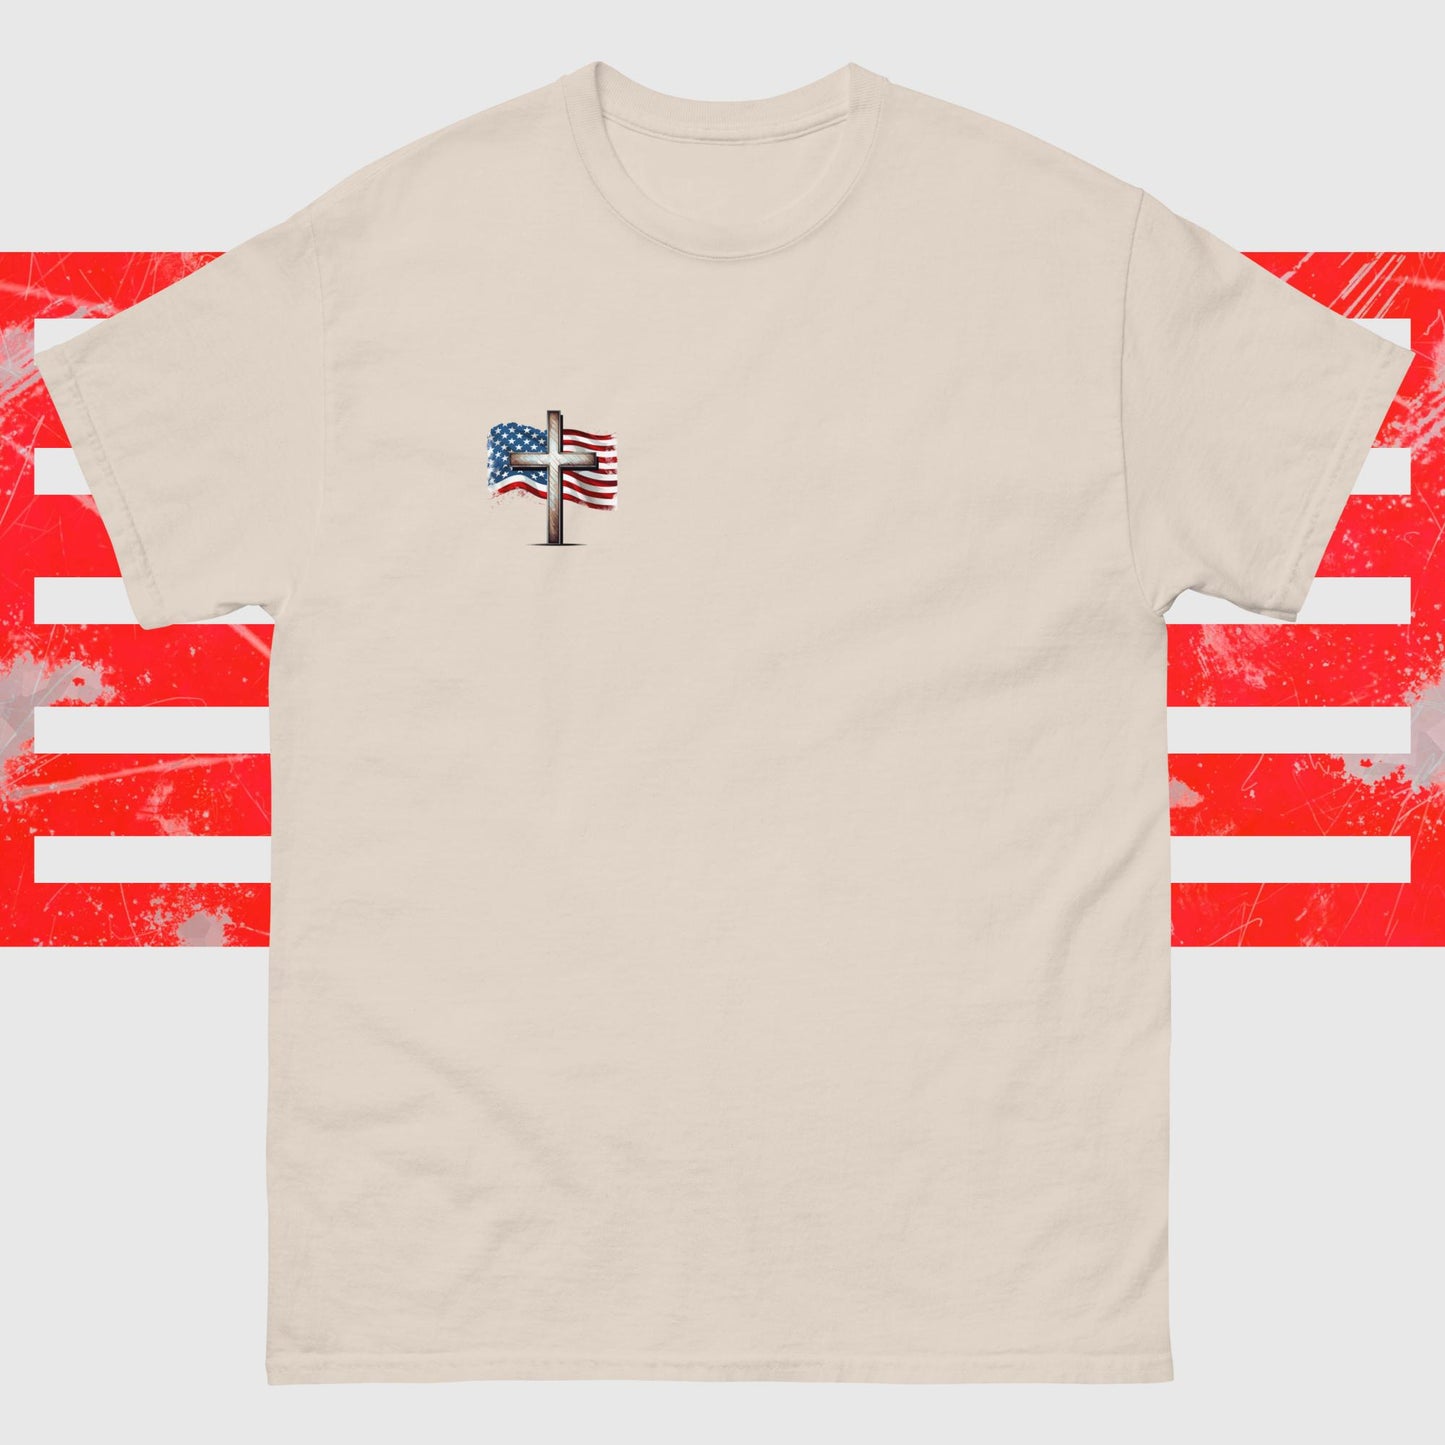 Cross and American Flag Shirt | American Flag Shirt | American Flag Cross